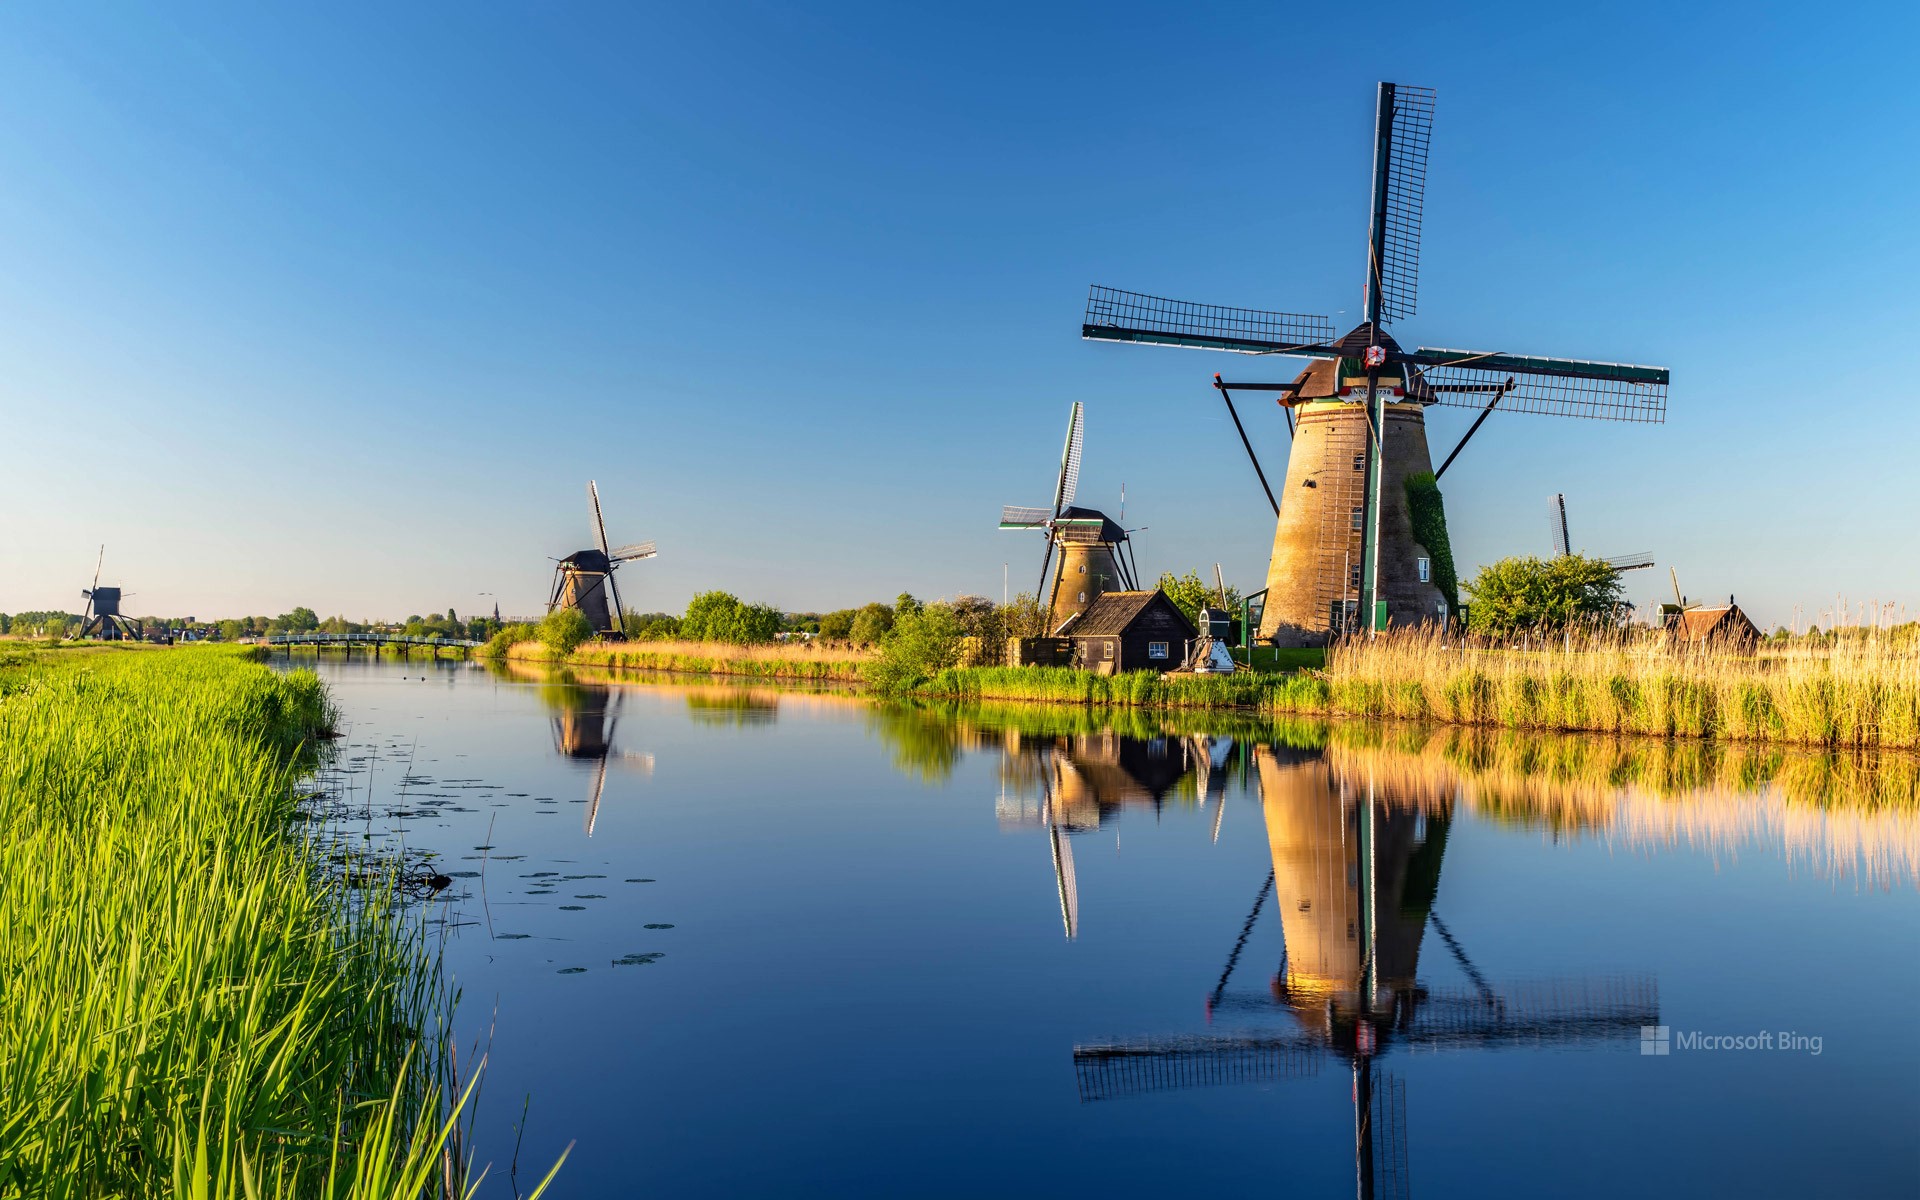 Windmills, Kinderdijk, Netherlands